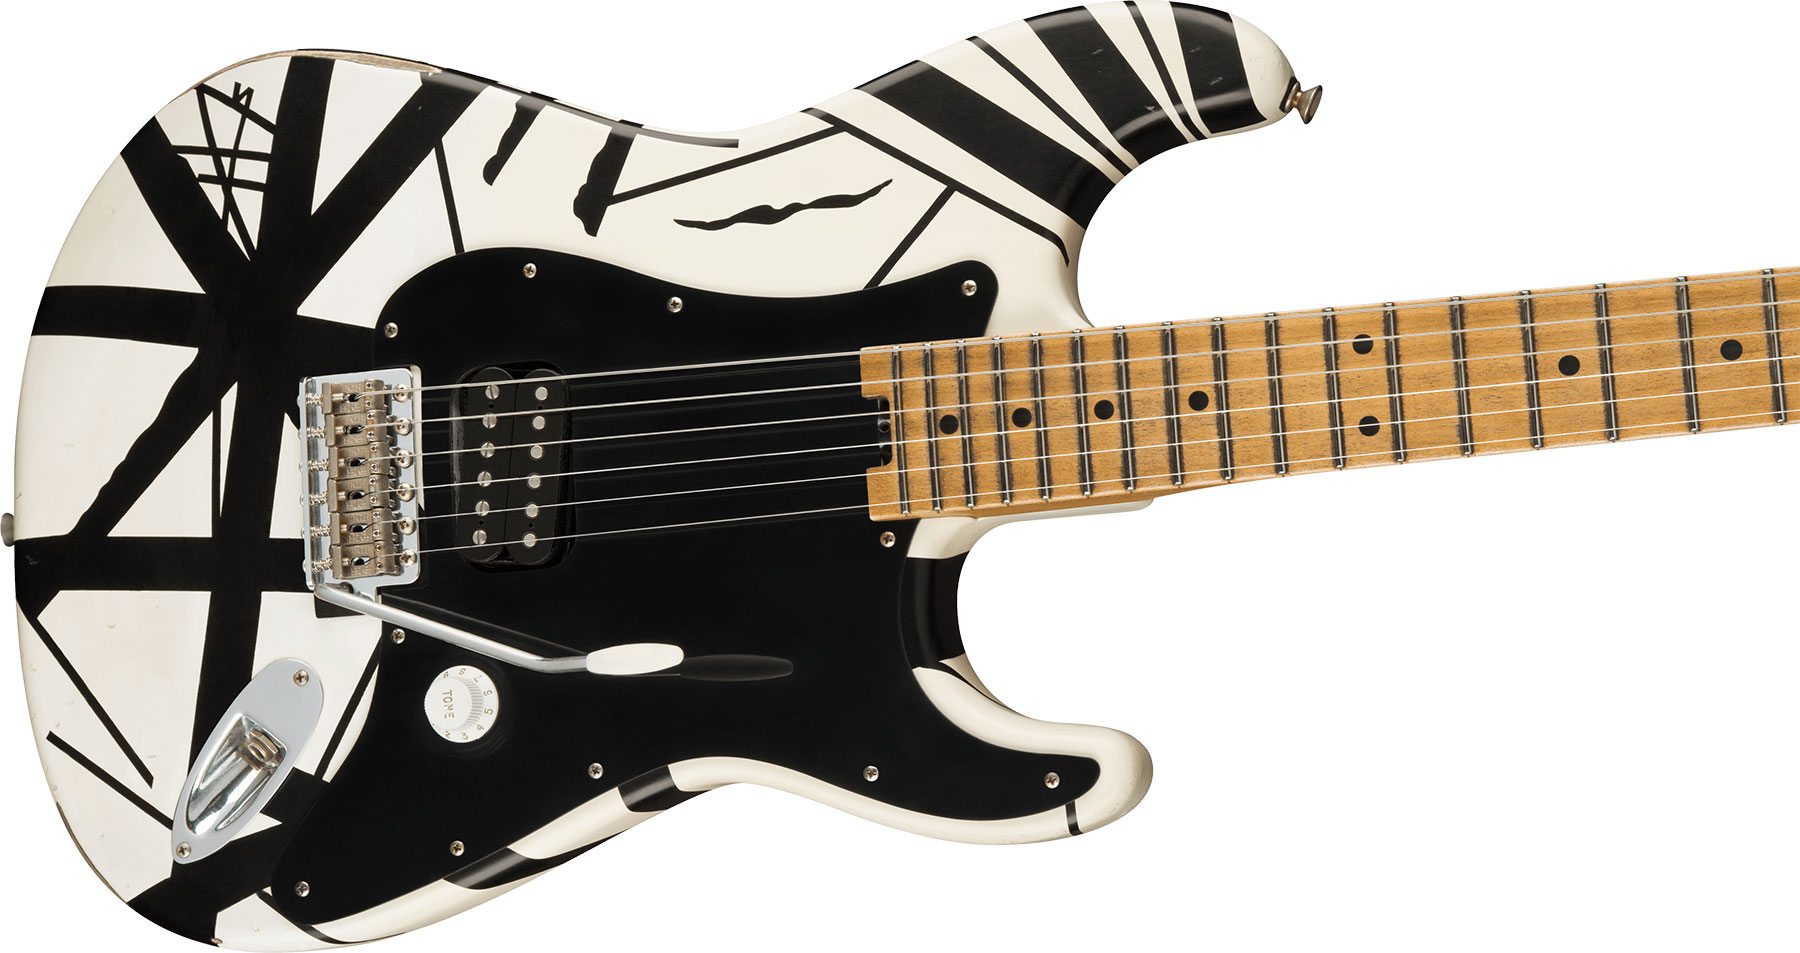 Evh '78 Eruption Striped Series Mex H Trem Mn - White With Black Stripes Relic - Str shape electric guitar - Variation 2